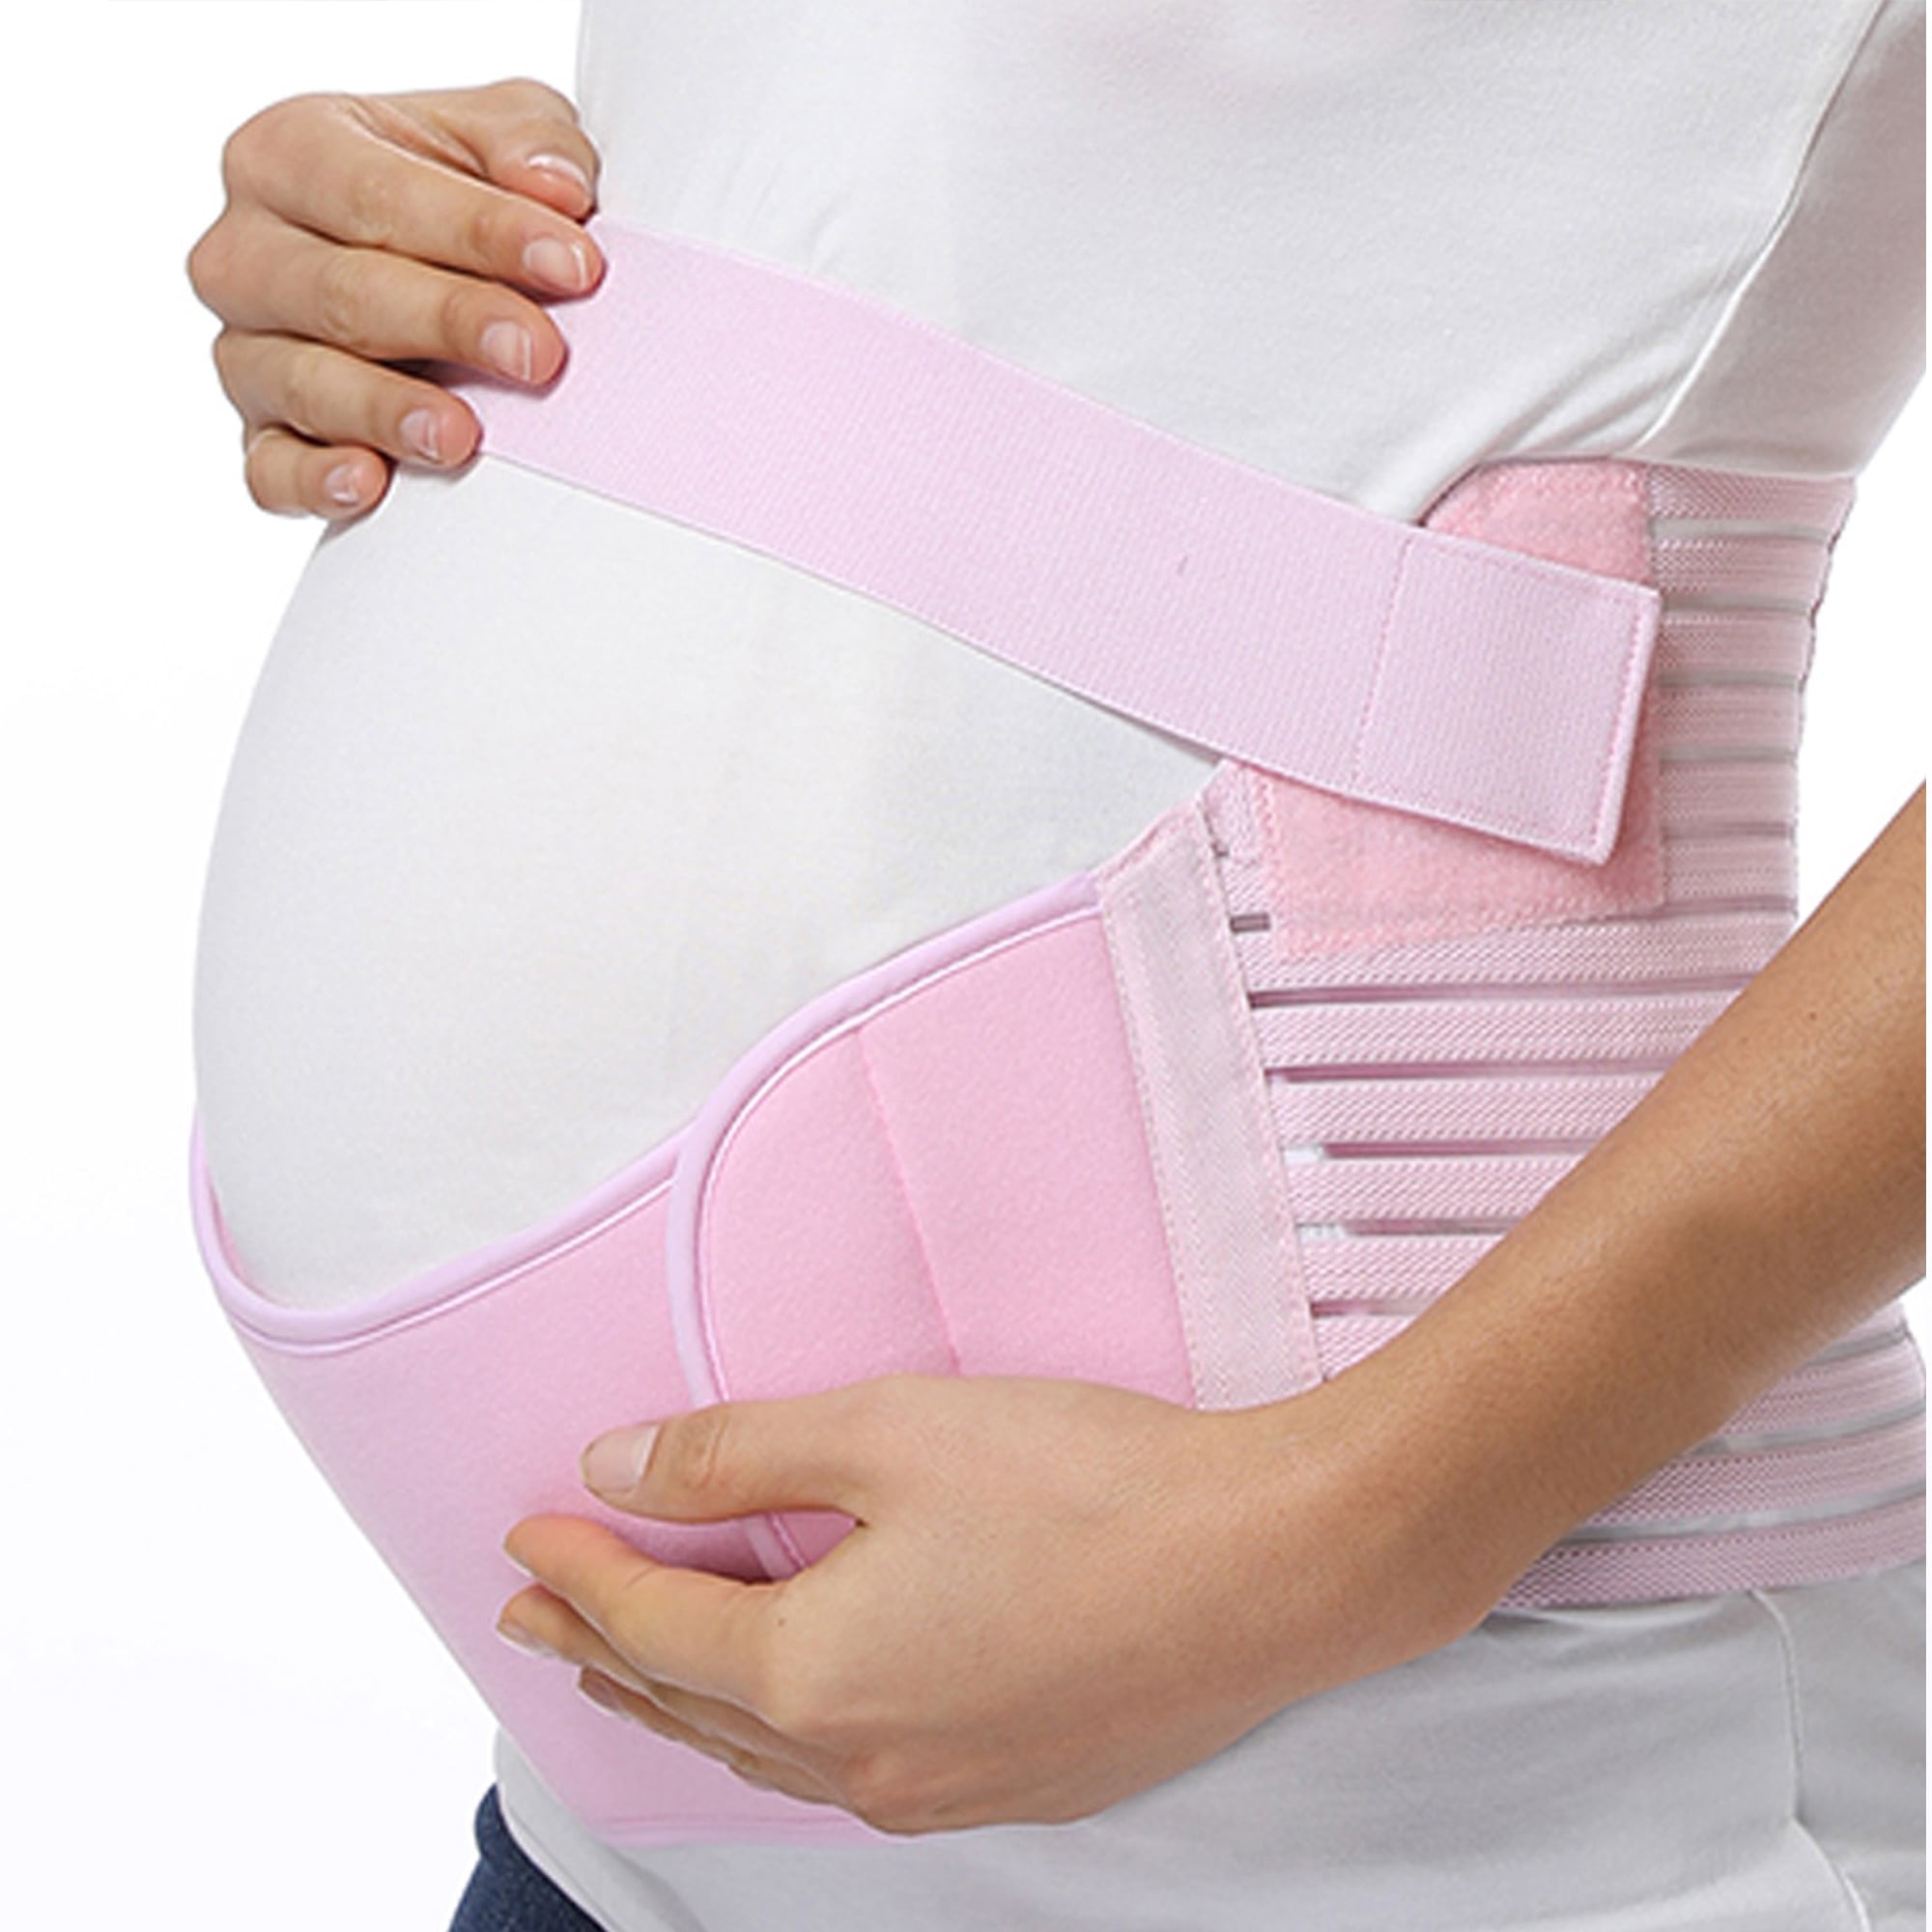 CFR Maternity Support Belt Waist Pregnant Belly Band Lumbar Medical Brace NHS 